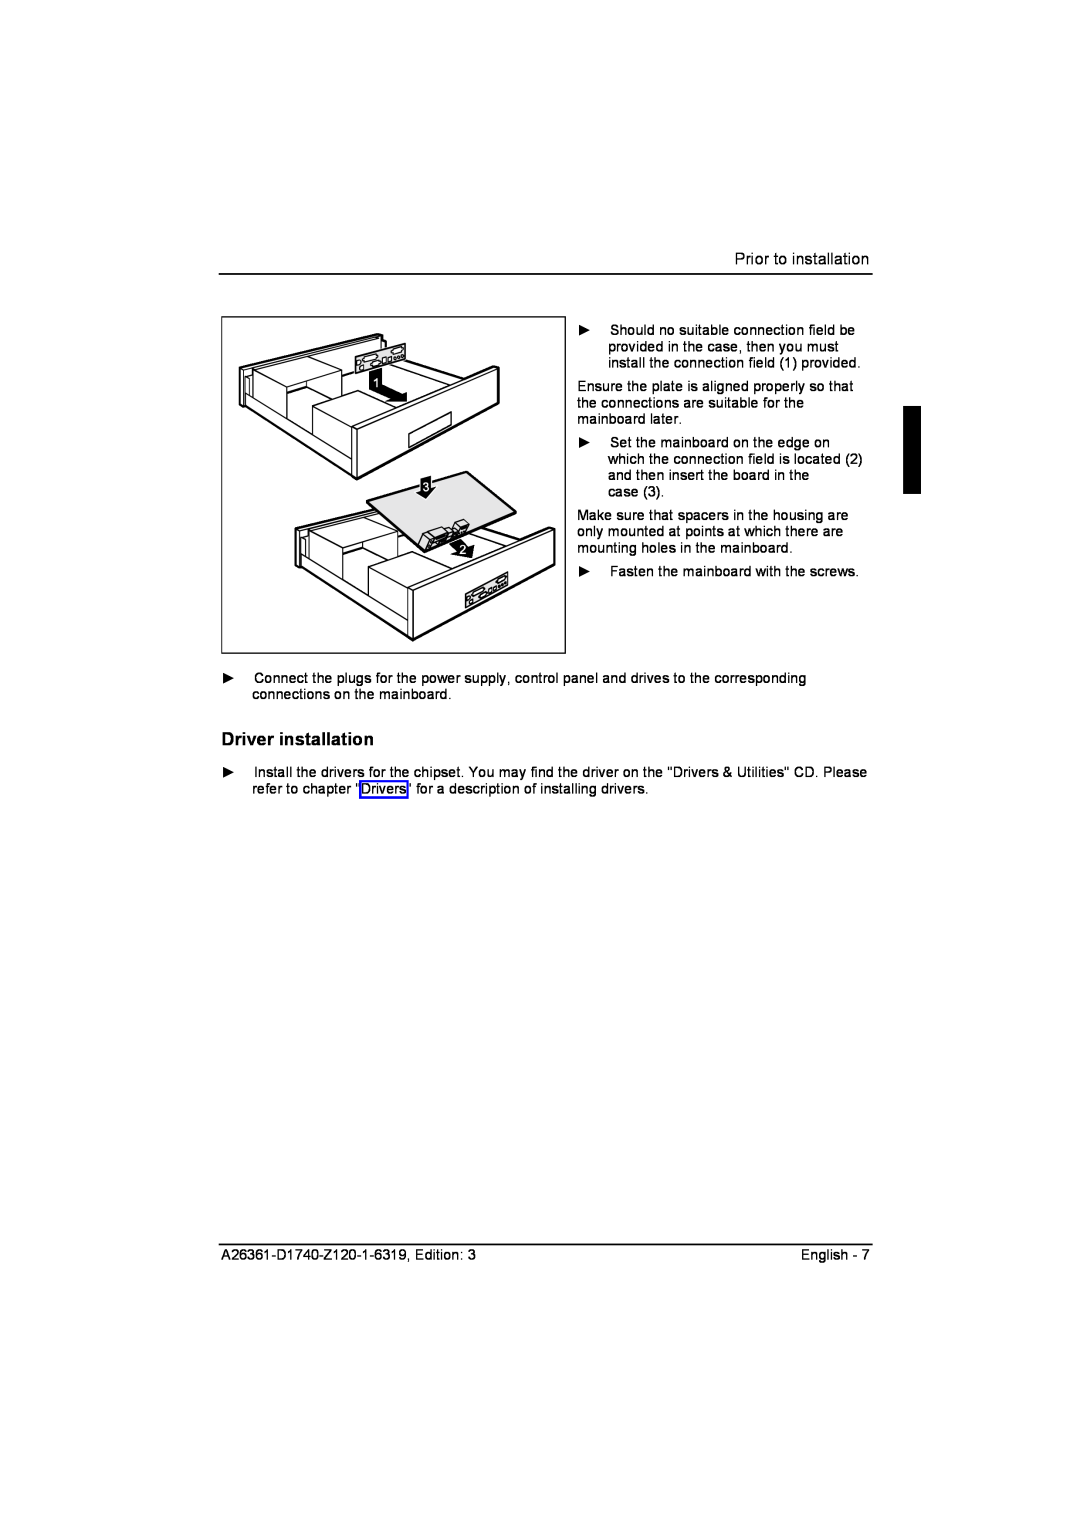 Fujitsu D1740 technical manual Driver installation, Prior to installation 